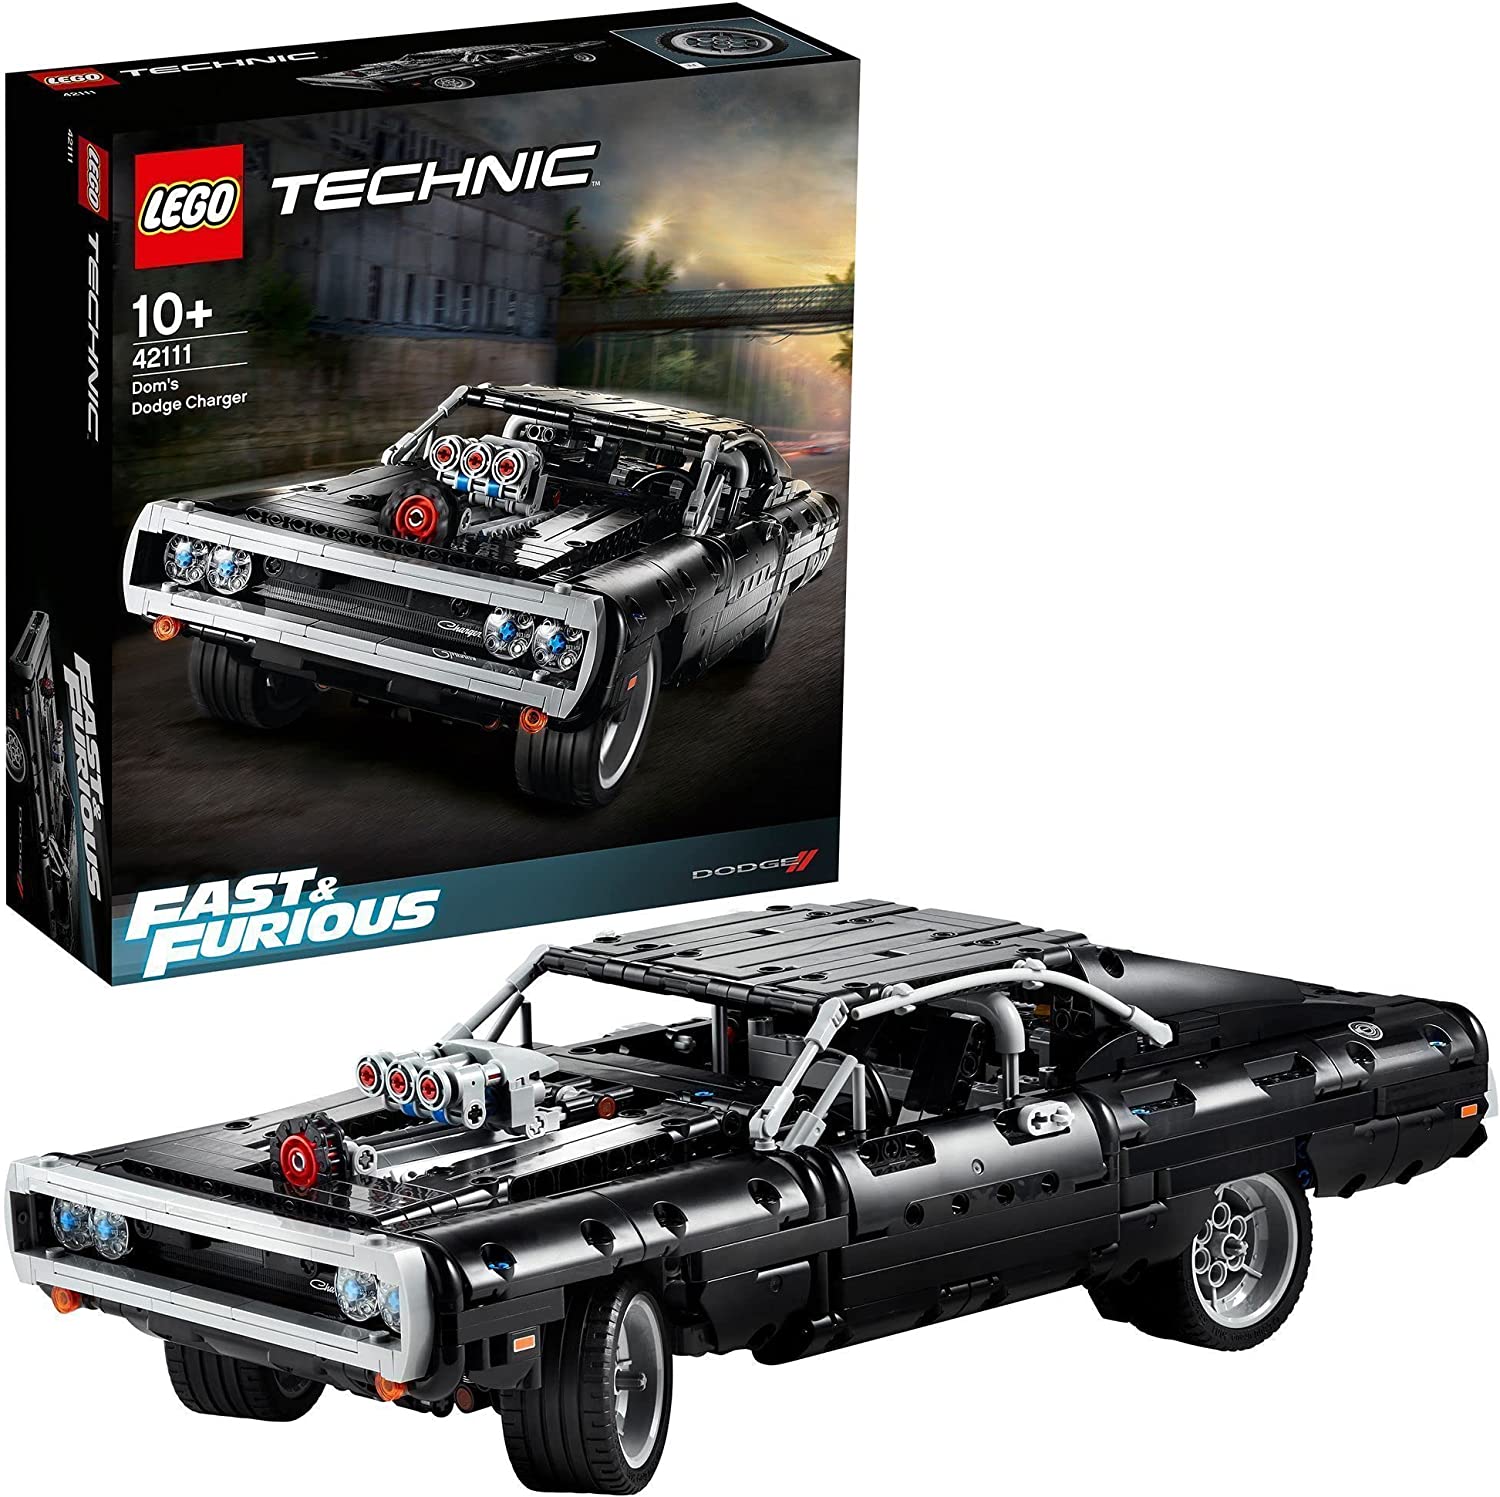 LEGO® Technic 42111 Technic Dom \ 's Dodge Charger, Multi-Color